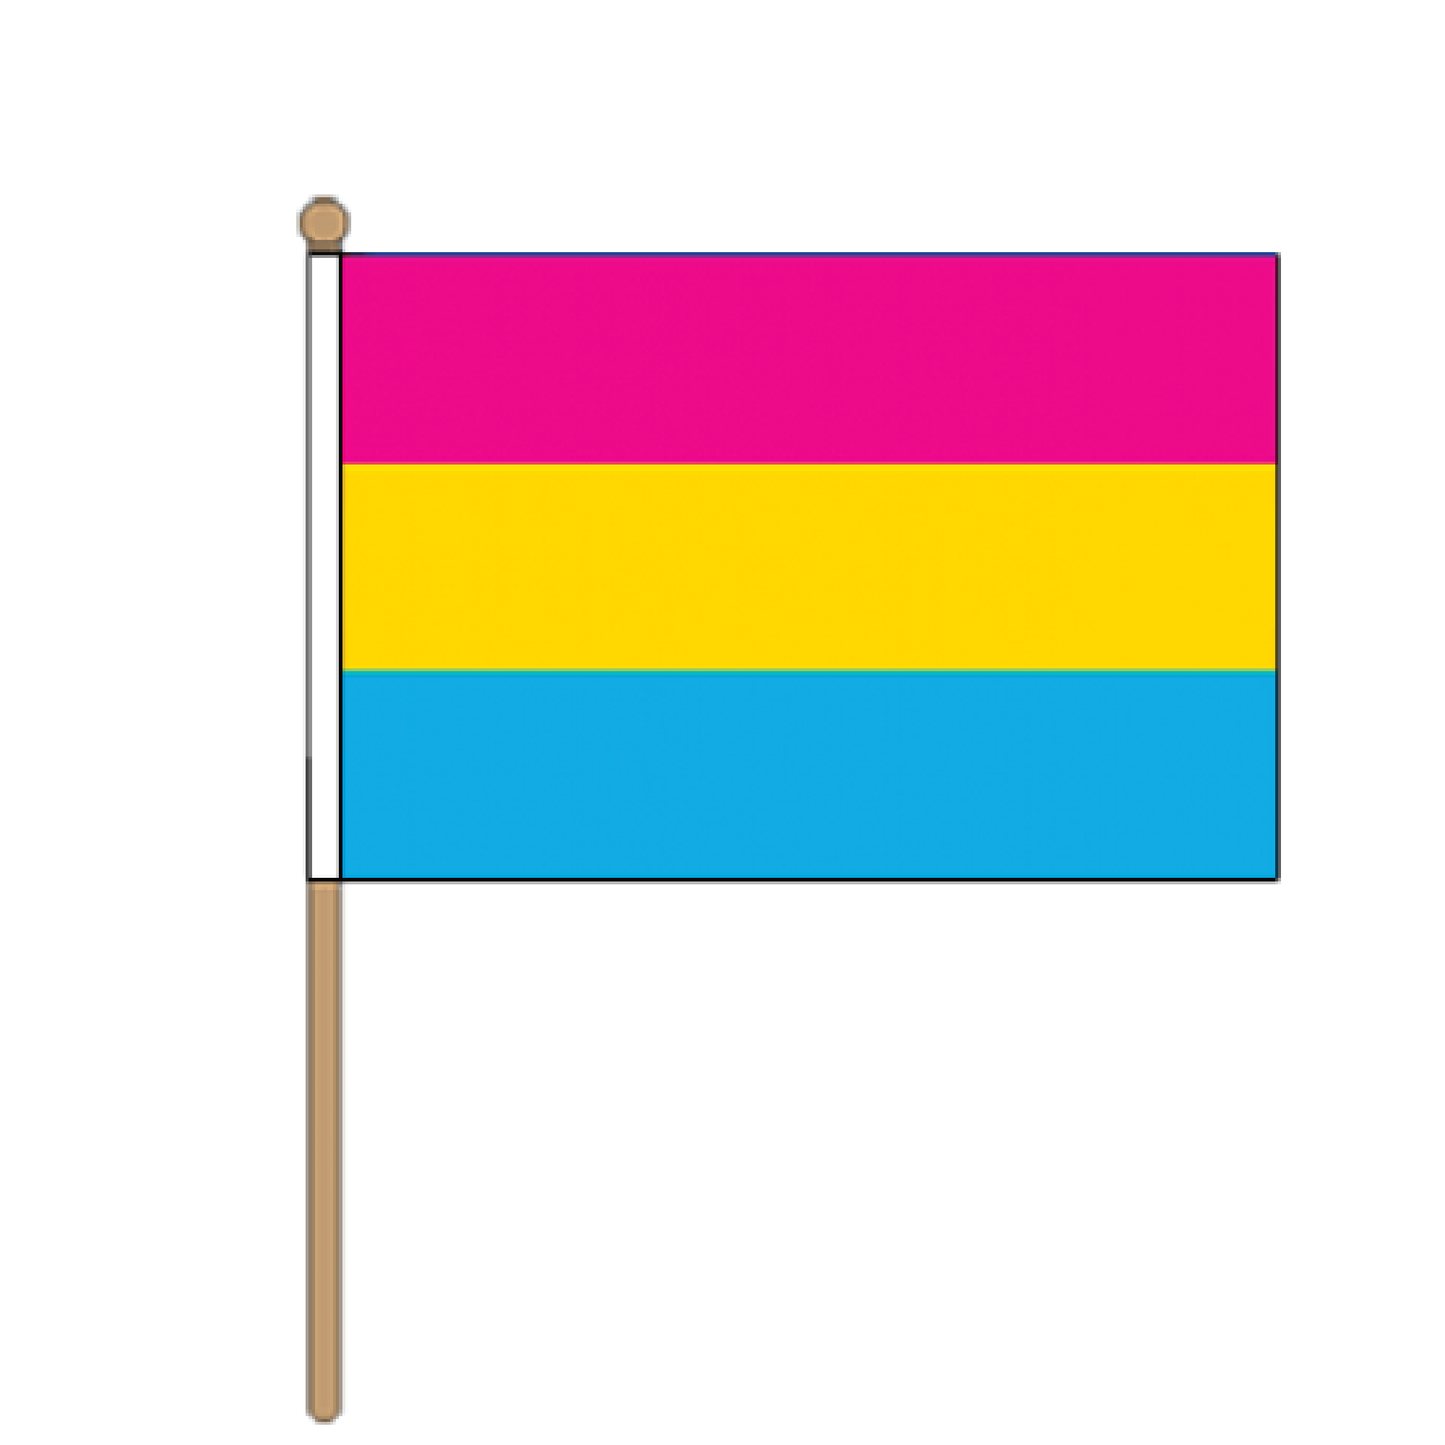 PANSEXUAL HAND FLAG - 23cm x 15cm (9" x 6")